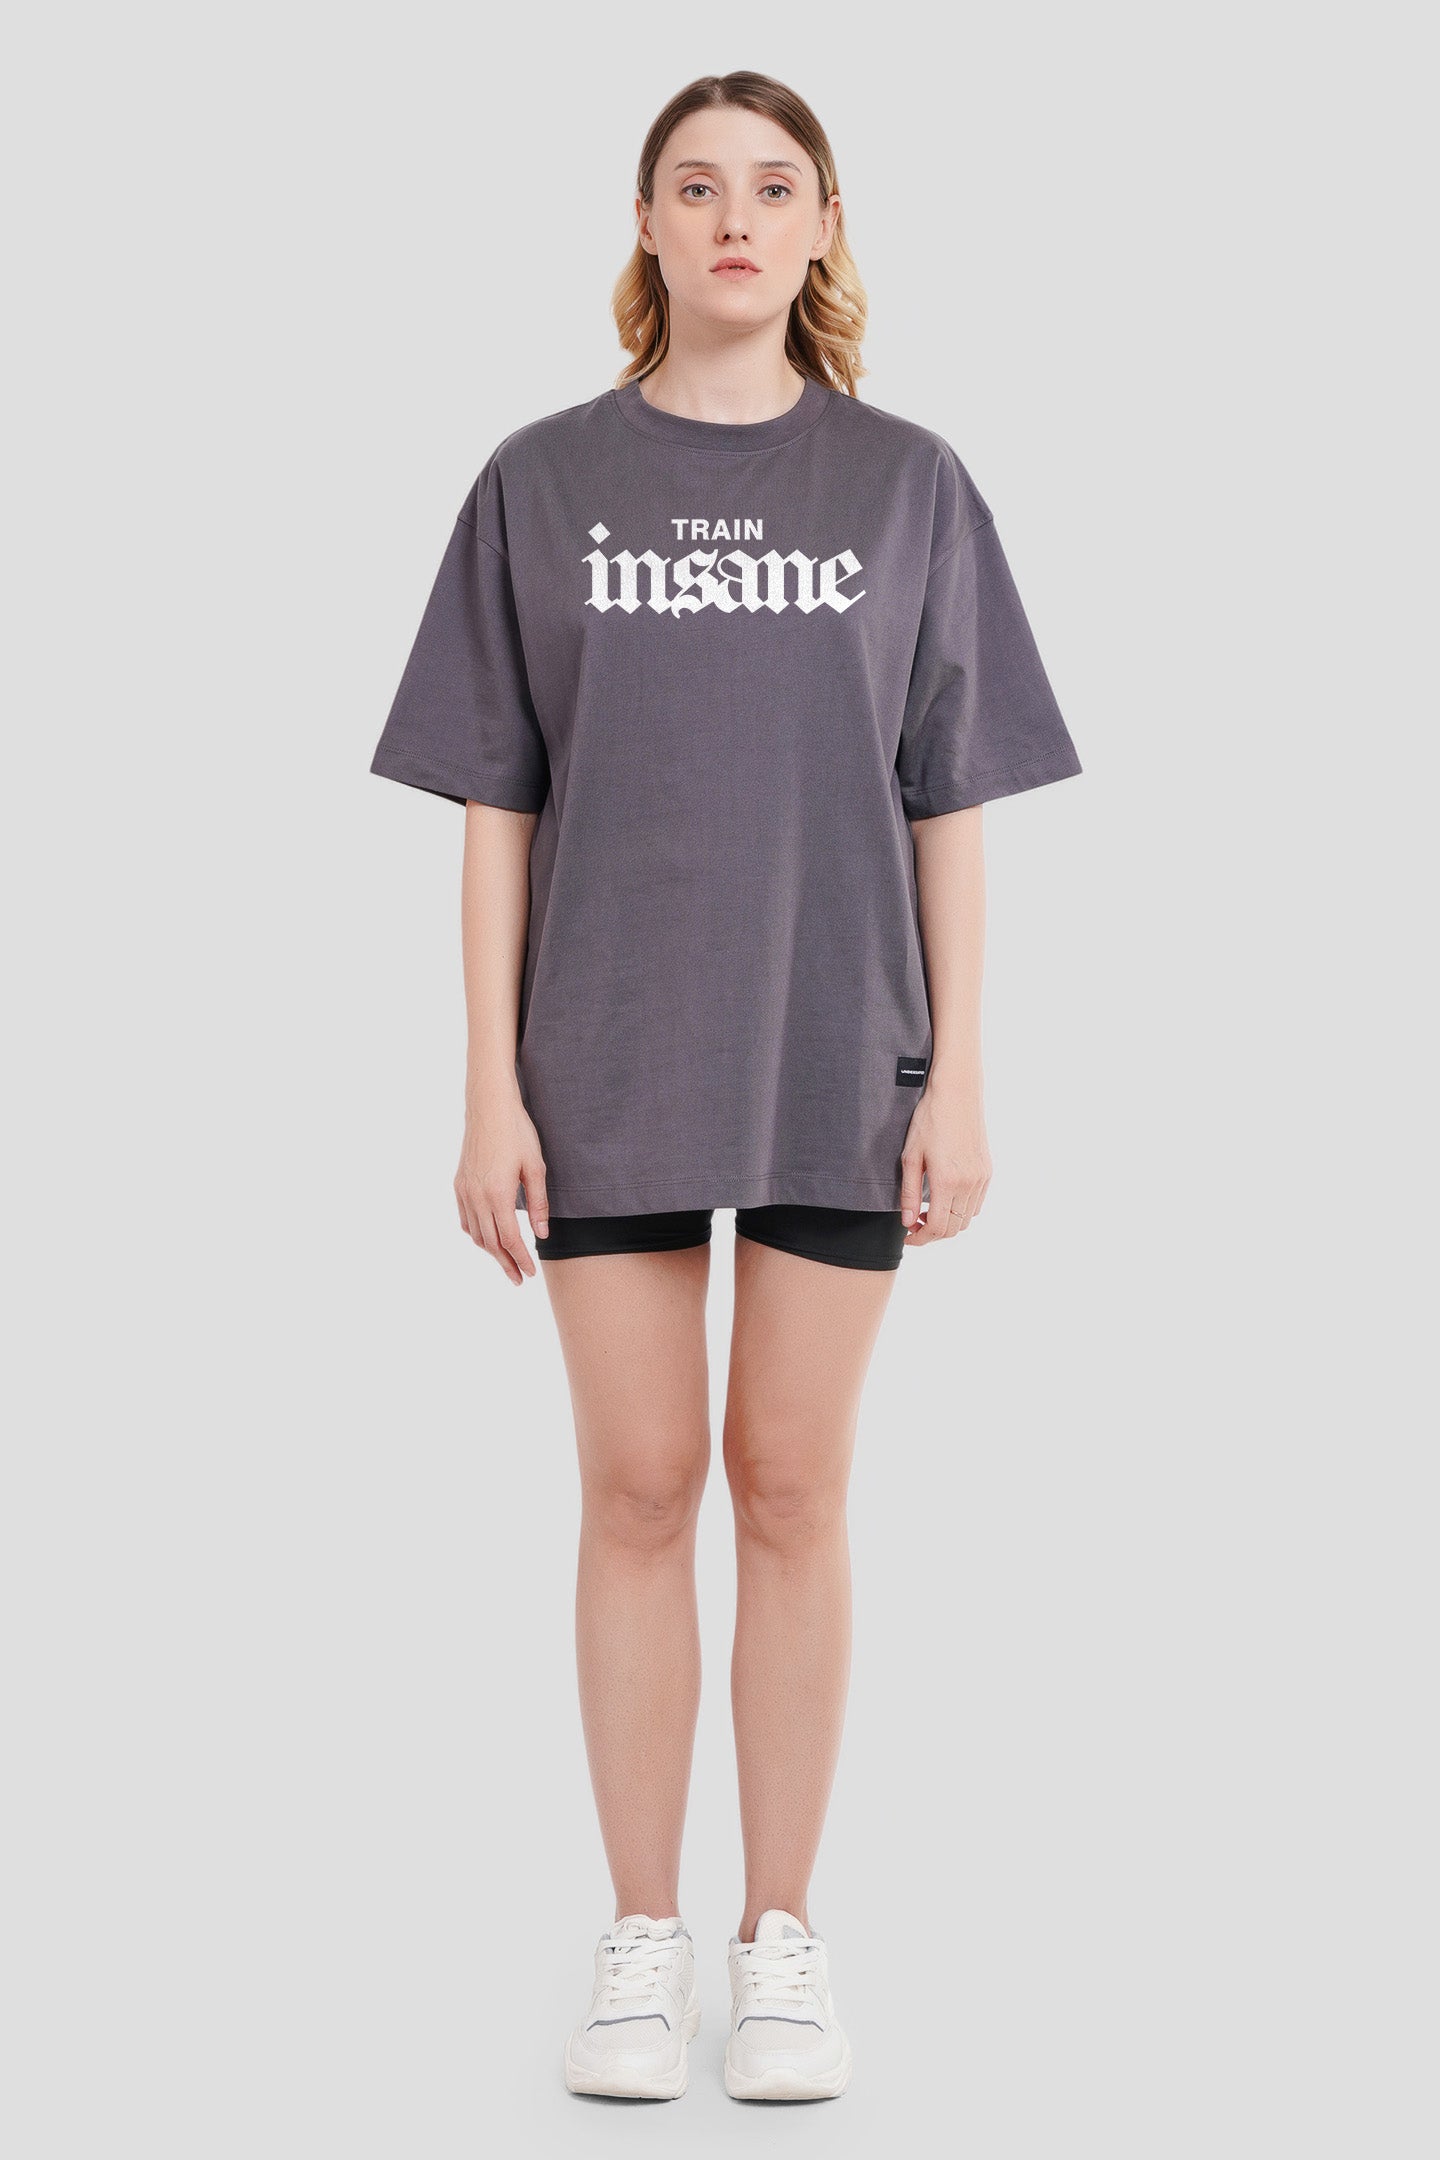 Insane Dark Grey Oversized Fit T-Shirt Women Pic 1